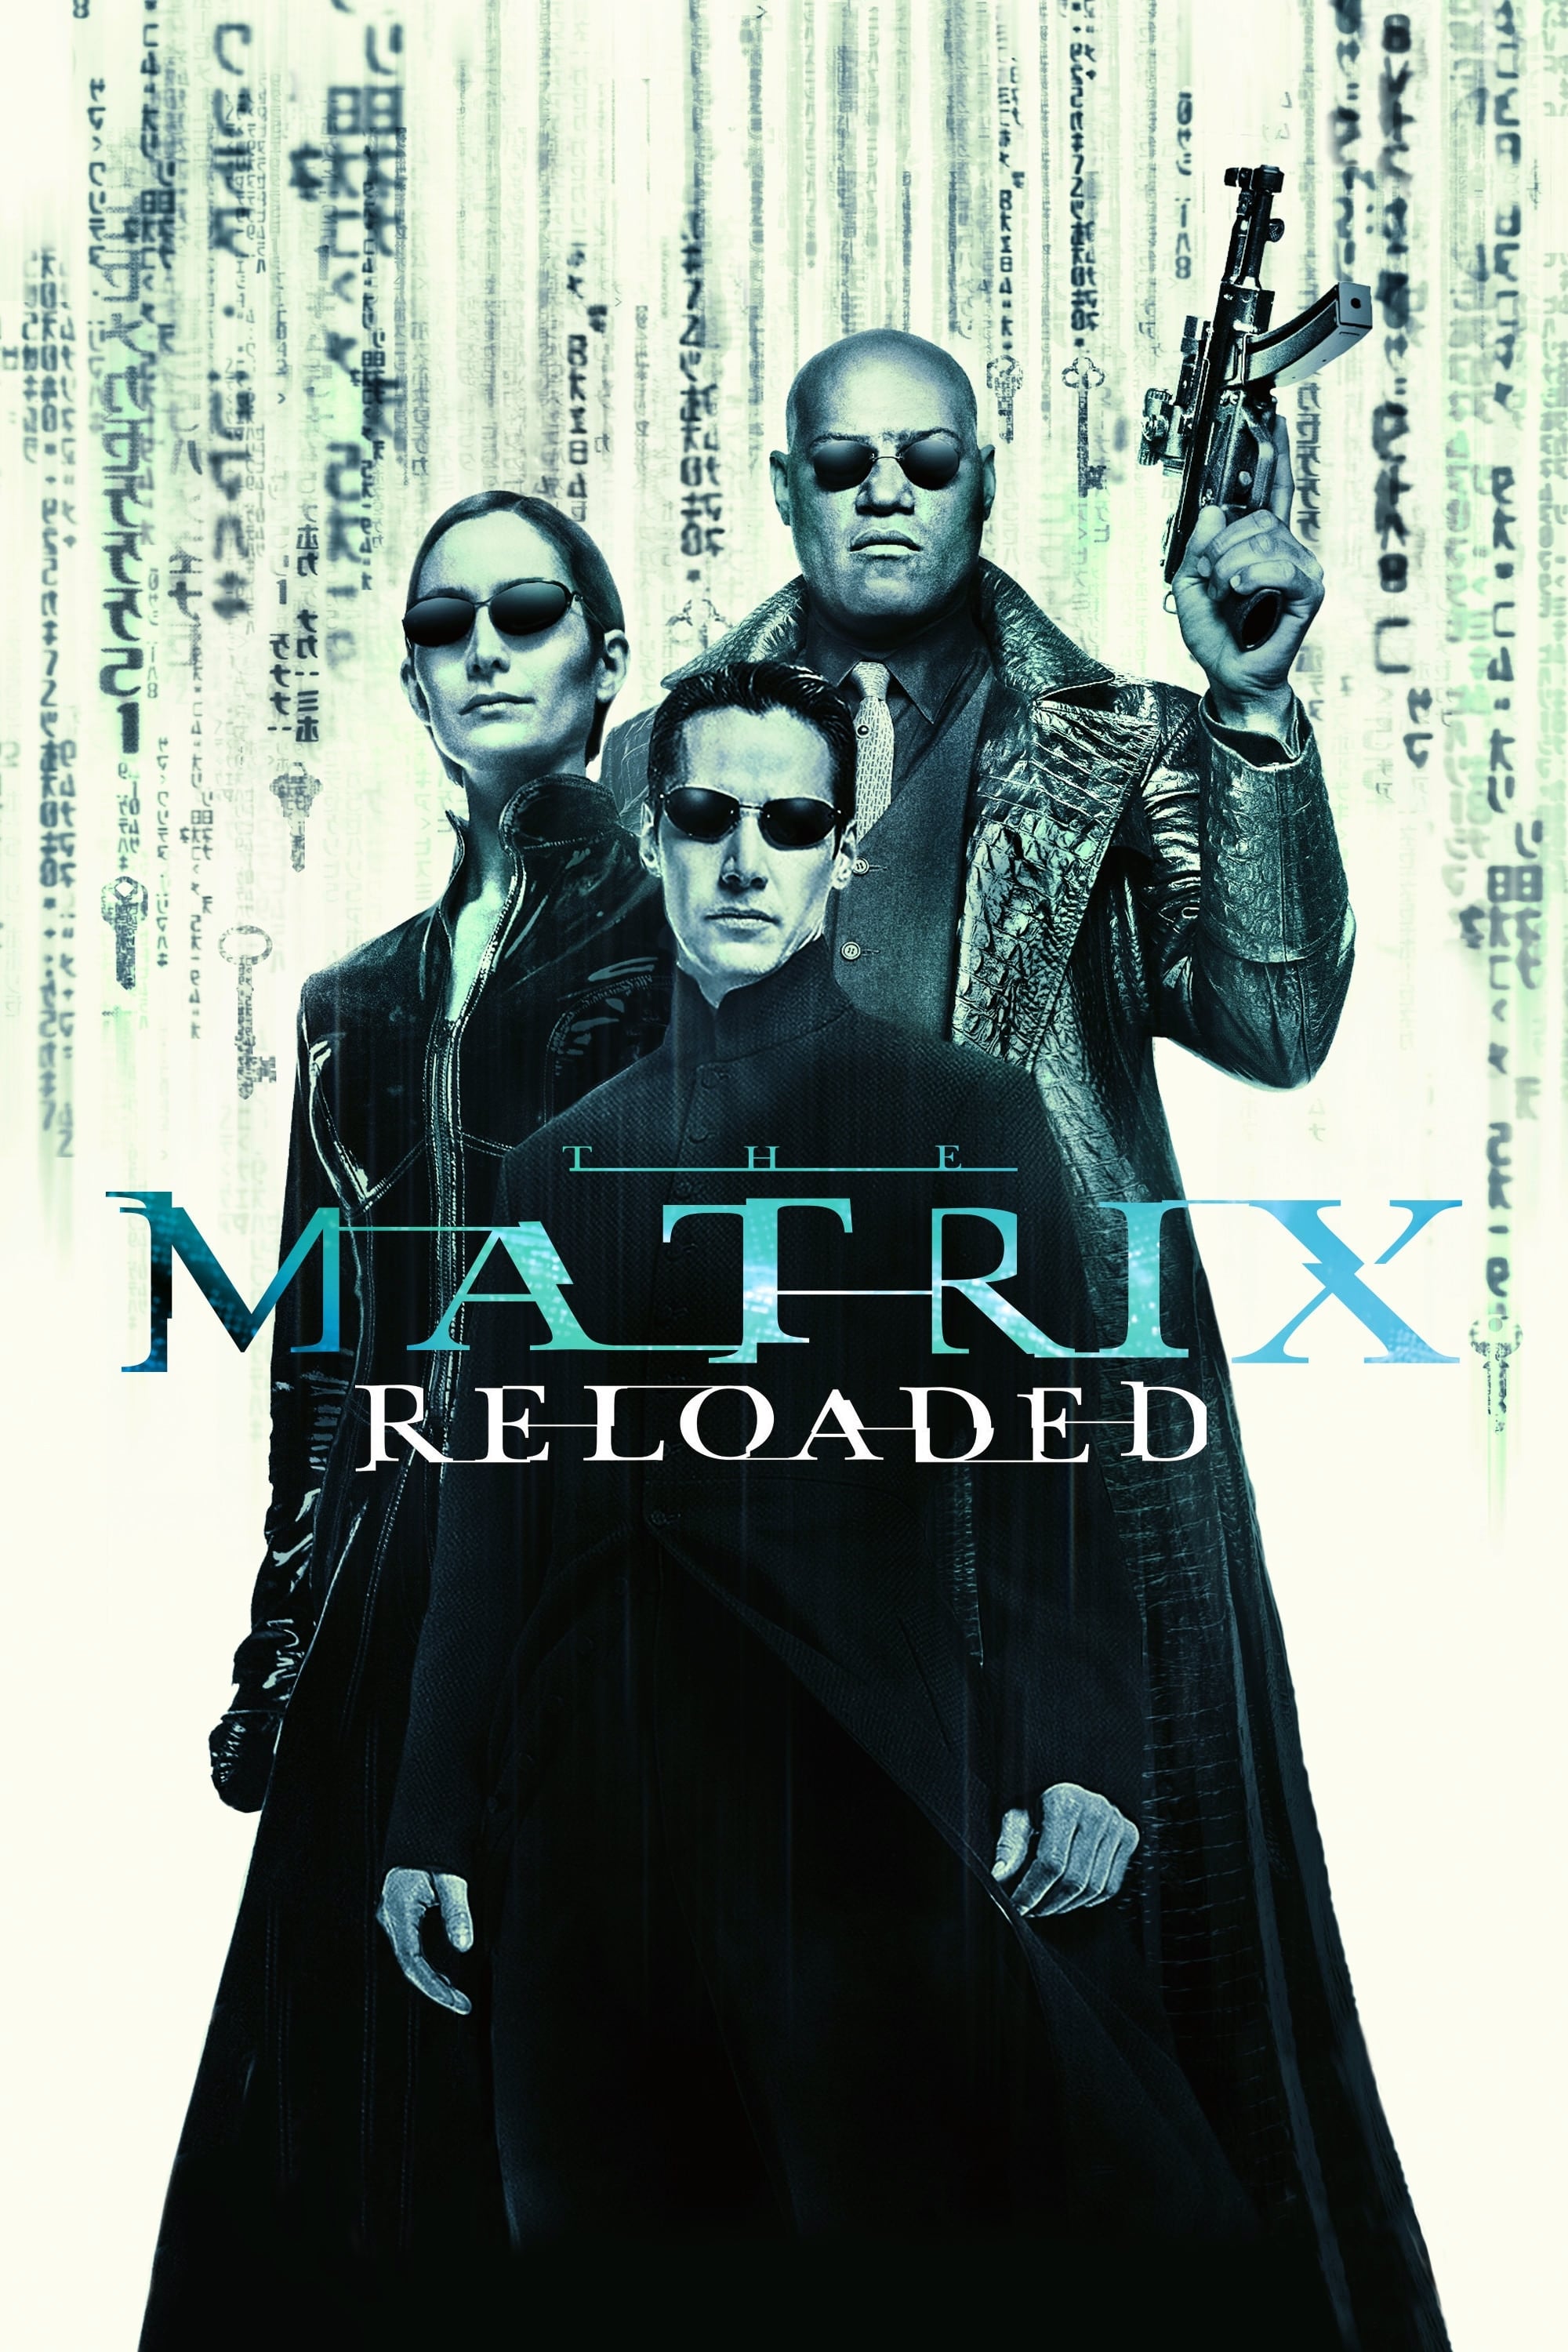 the matrix full movie